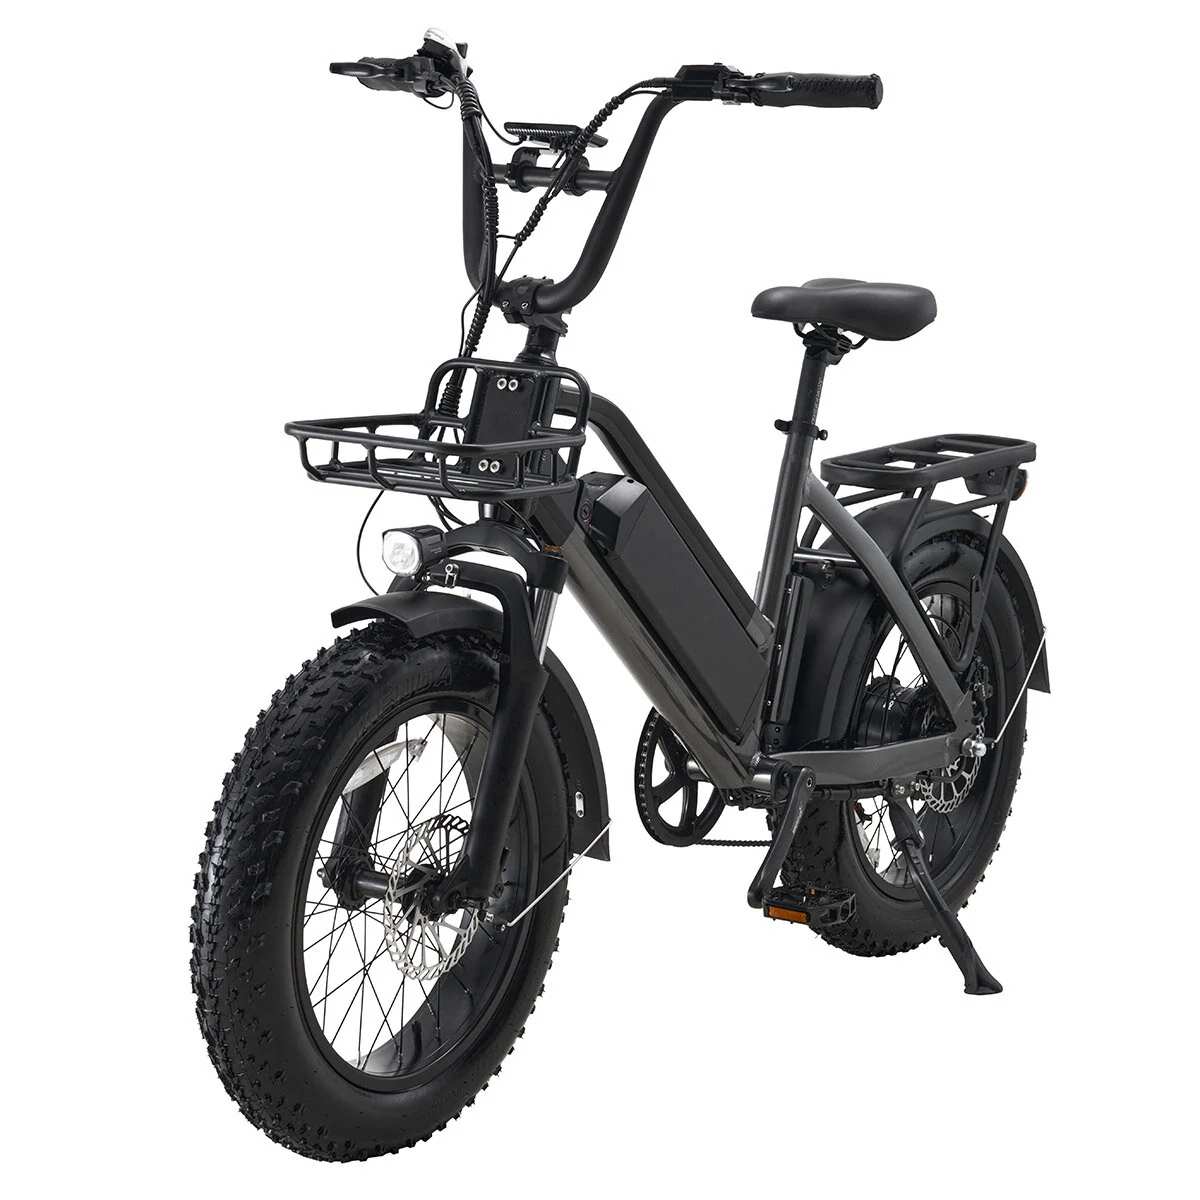 FiGoo S1 52V Electric Bicycle Banggood Coupon Promo Code [US Warehouse]